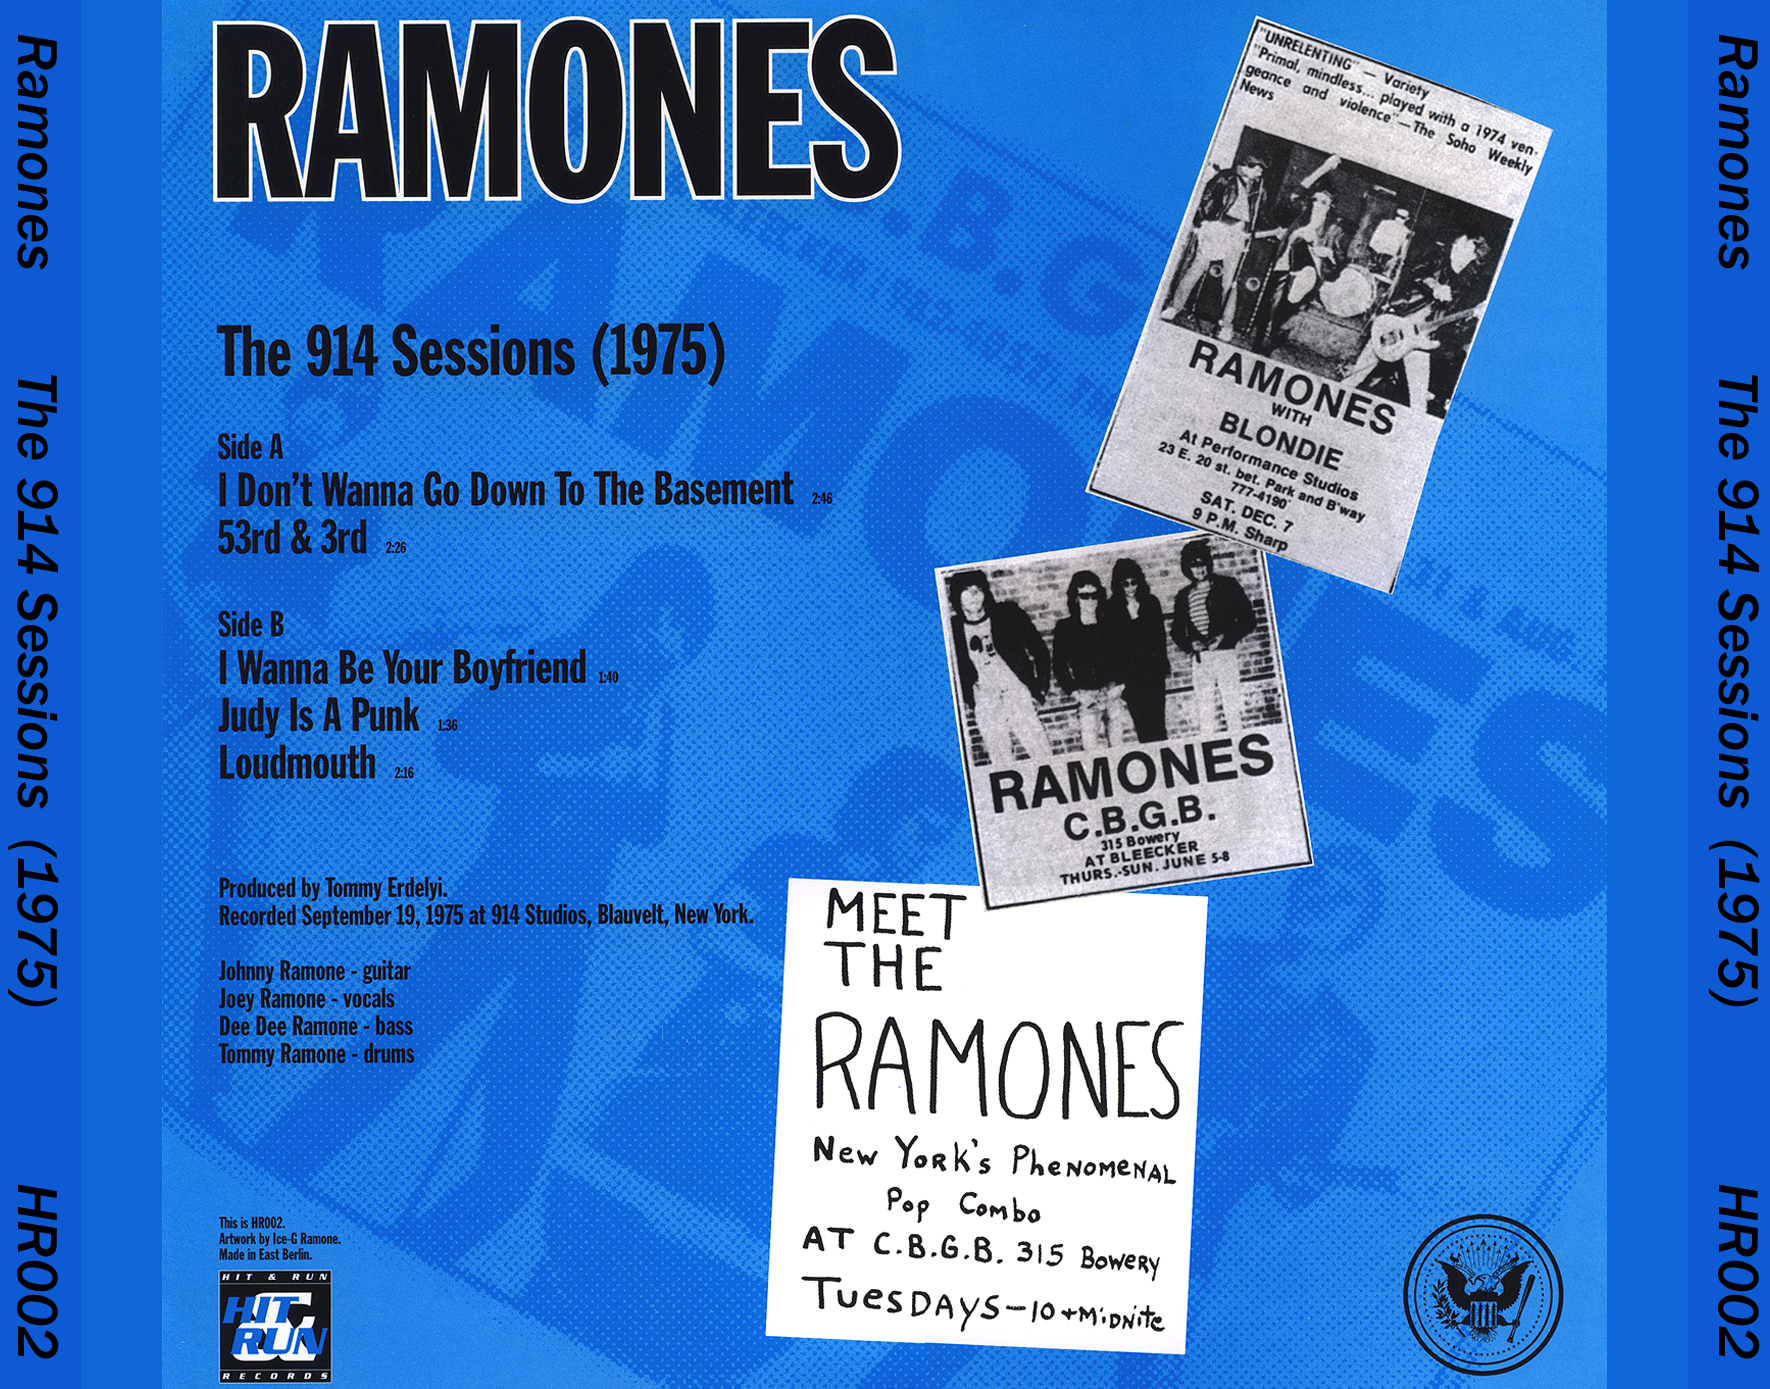 Ramones1975JudysInTheBasementThe914Sessions2.tif